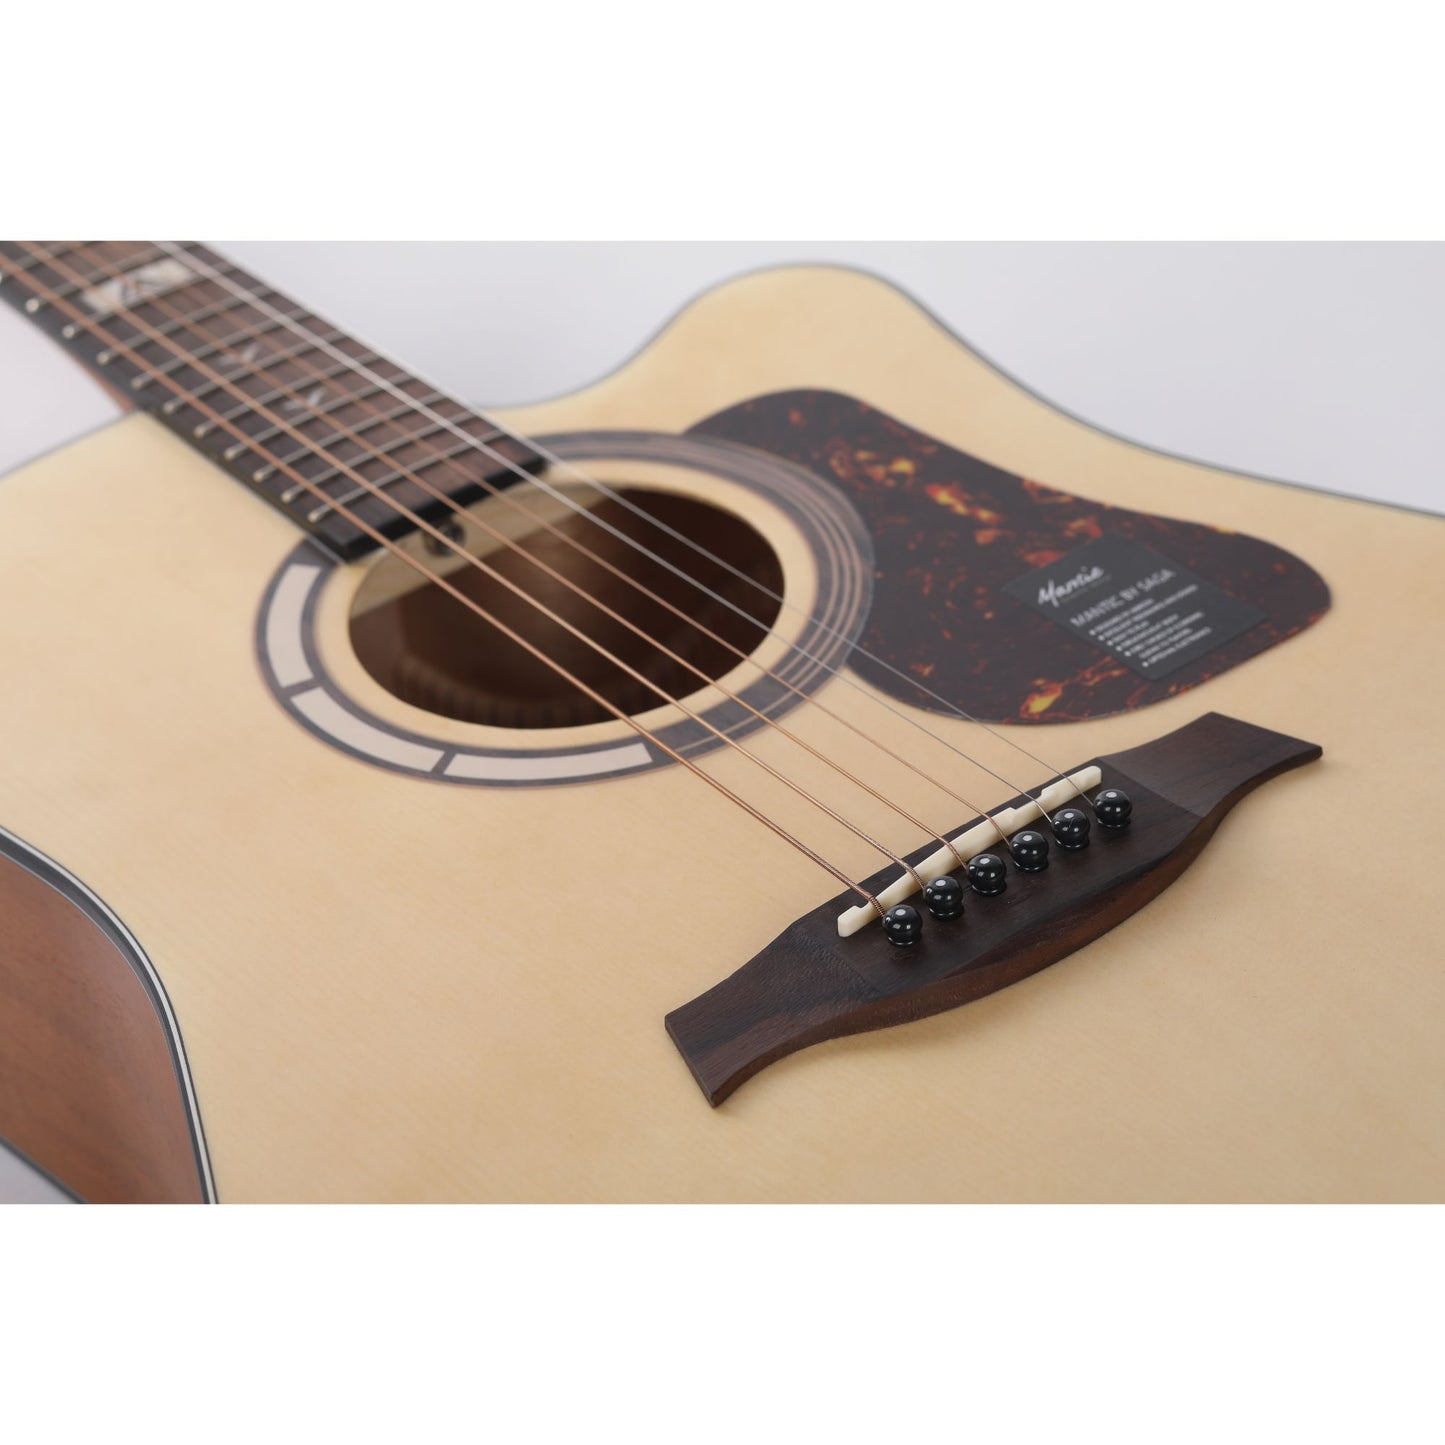 Mantic GT1DC Acoustic Guitar - Natural